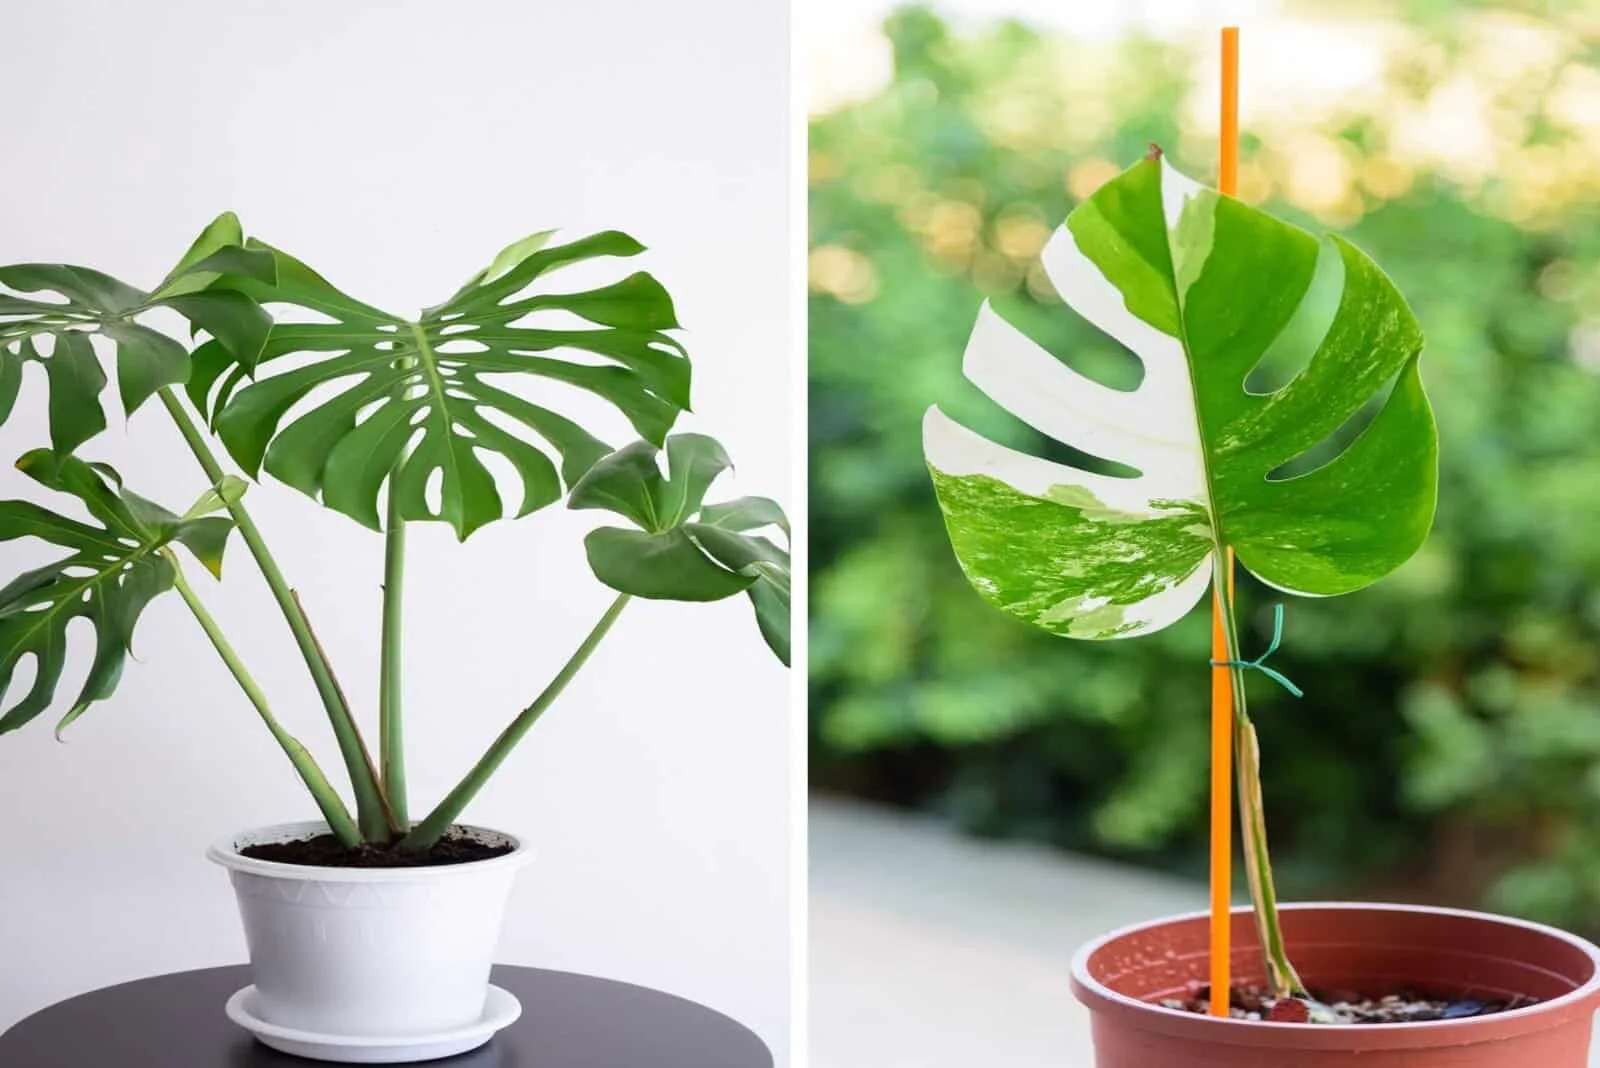 two similar plants